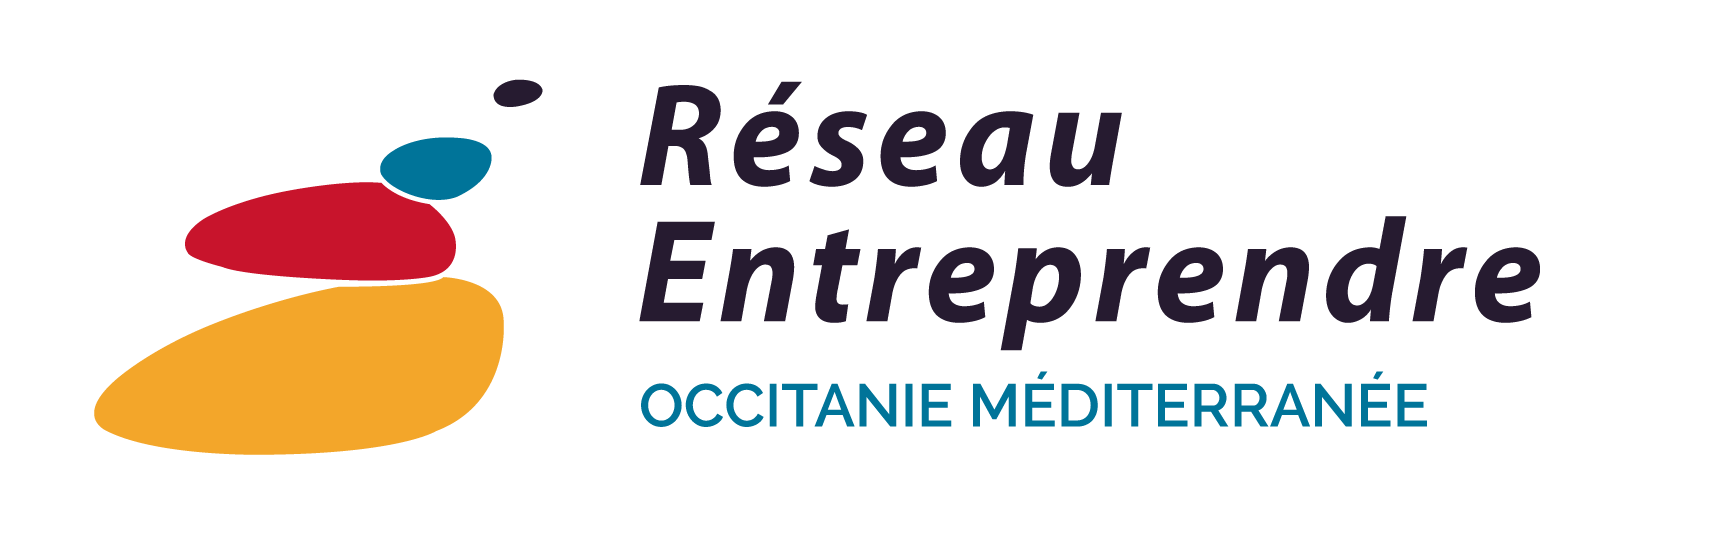 https://www.reseau-entreprendre.org/occitanie-mediterranee/